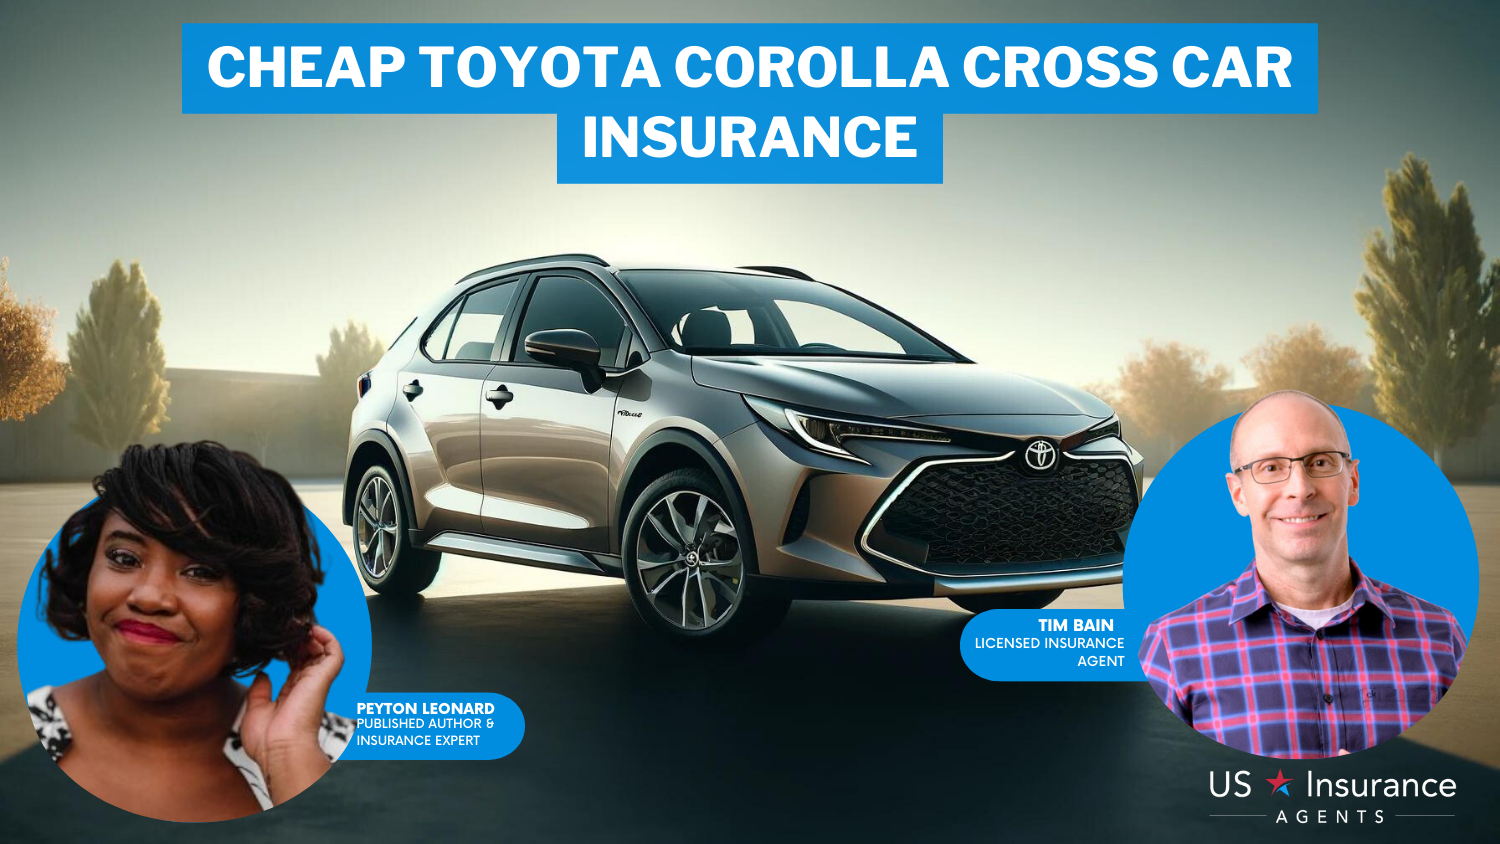 Cheap Toyota Corolla Cross Car Insurance: USAA, Allstate, and Liberty Mutual